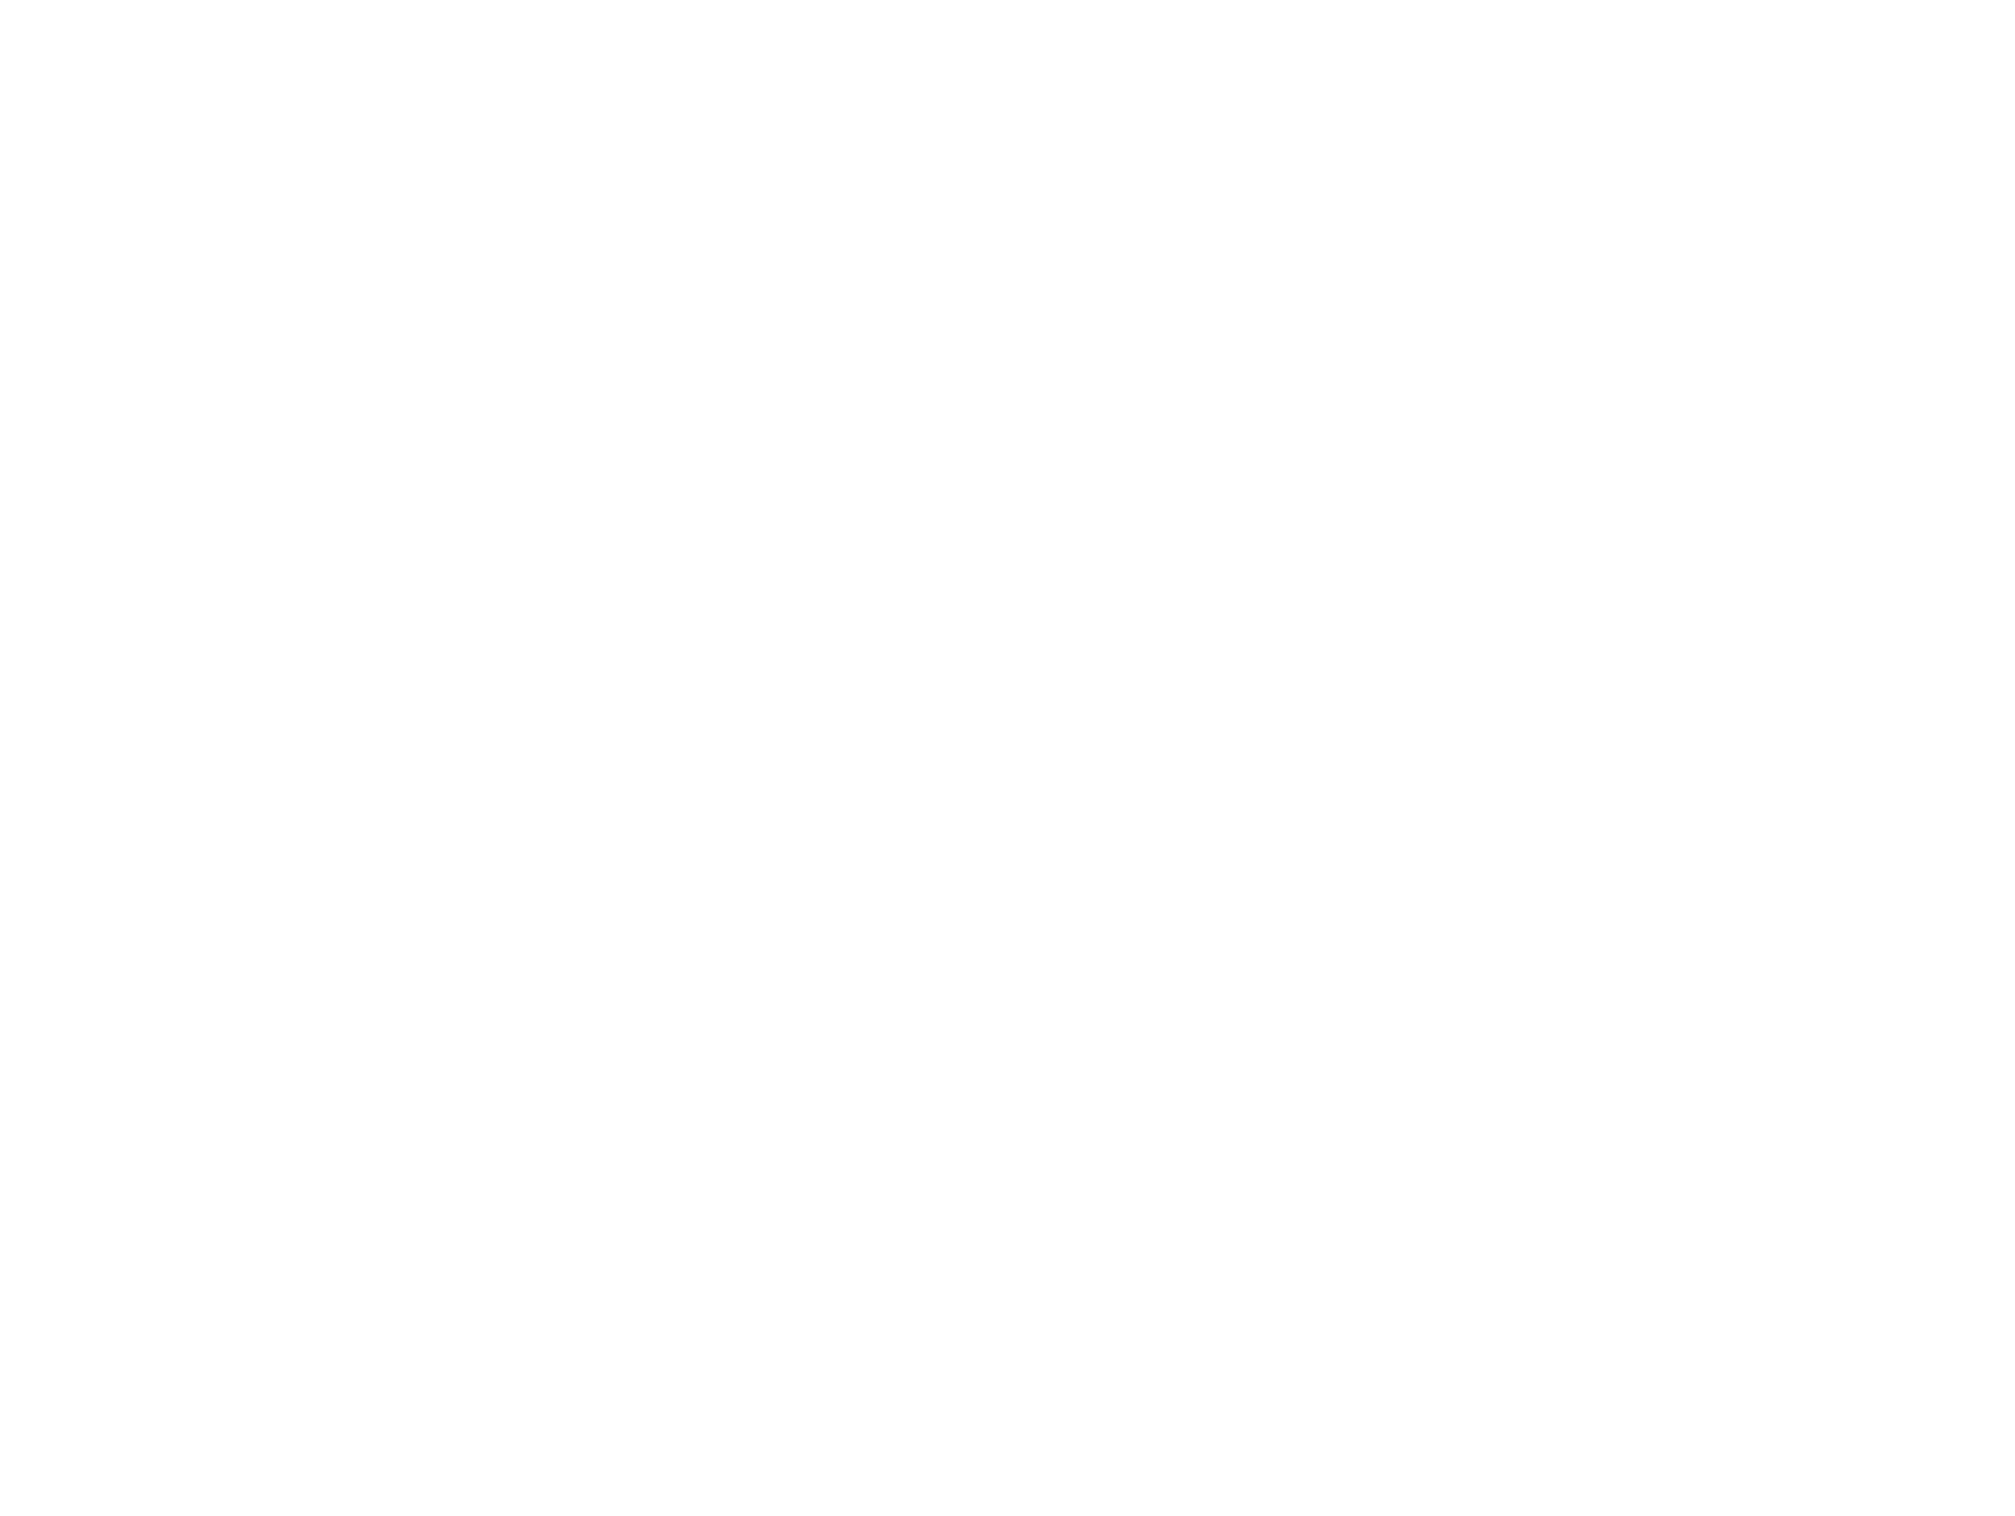 Business Développement Organisation